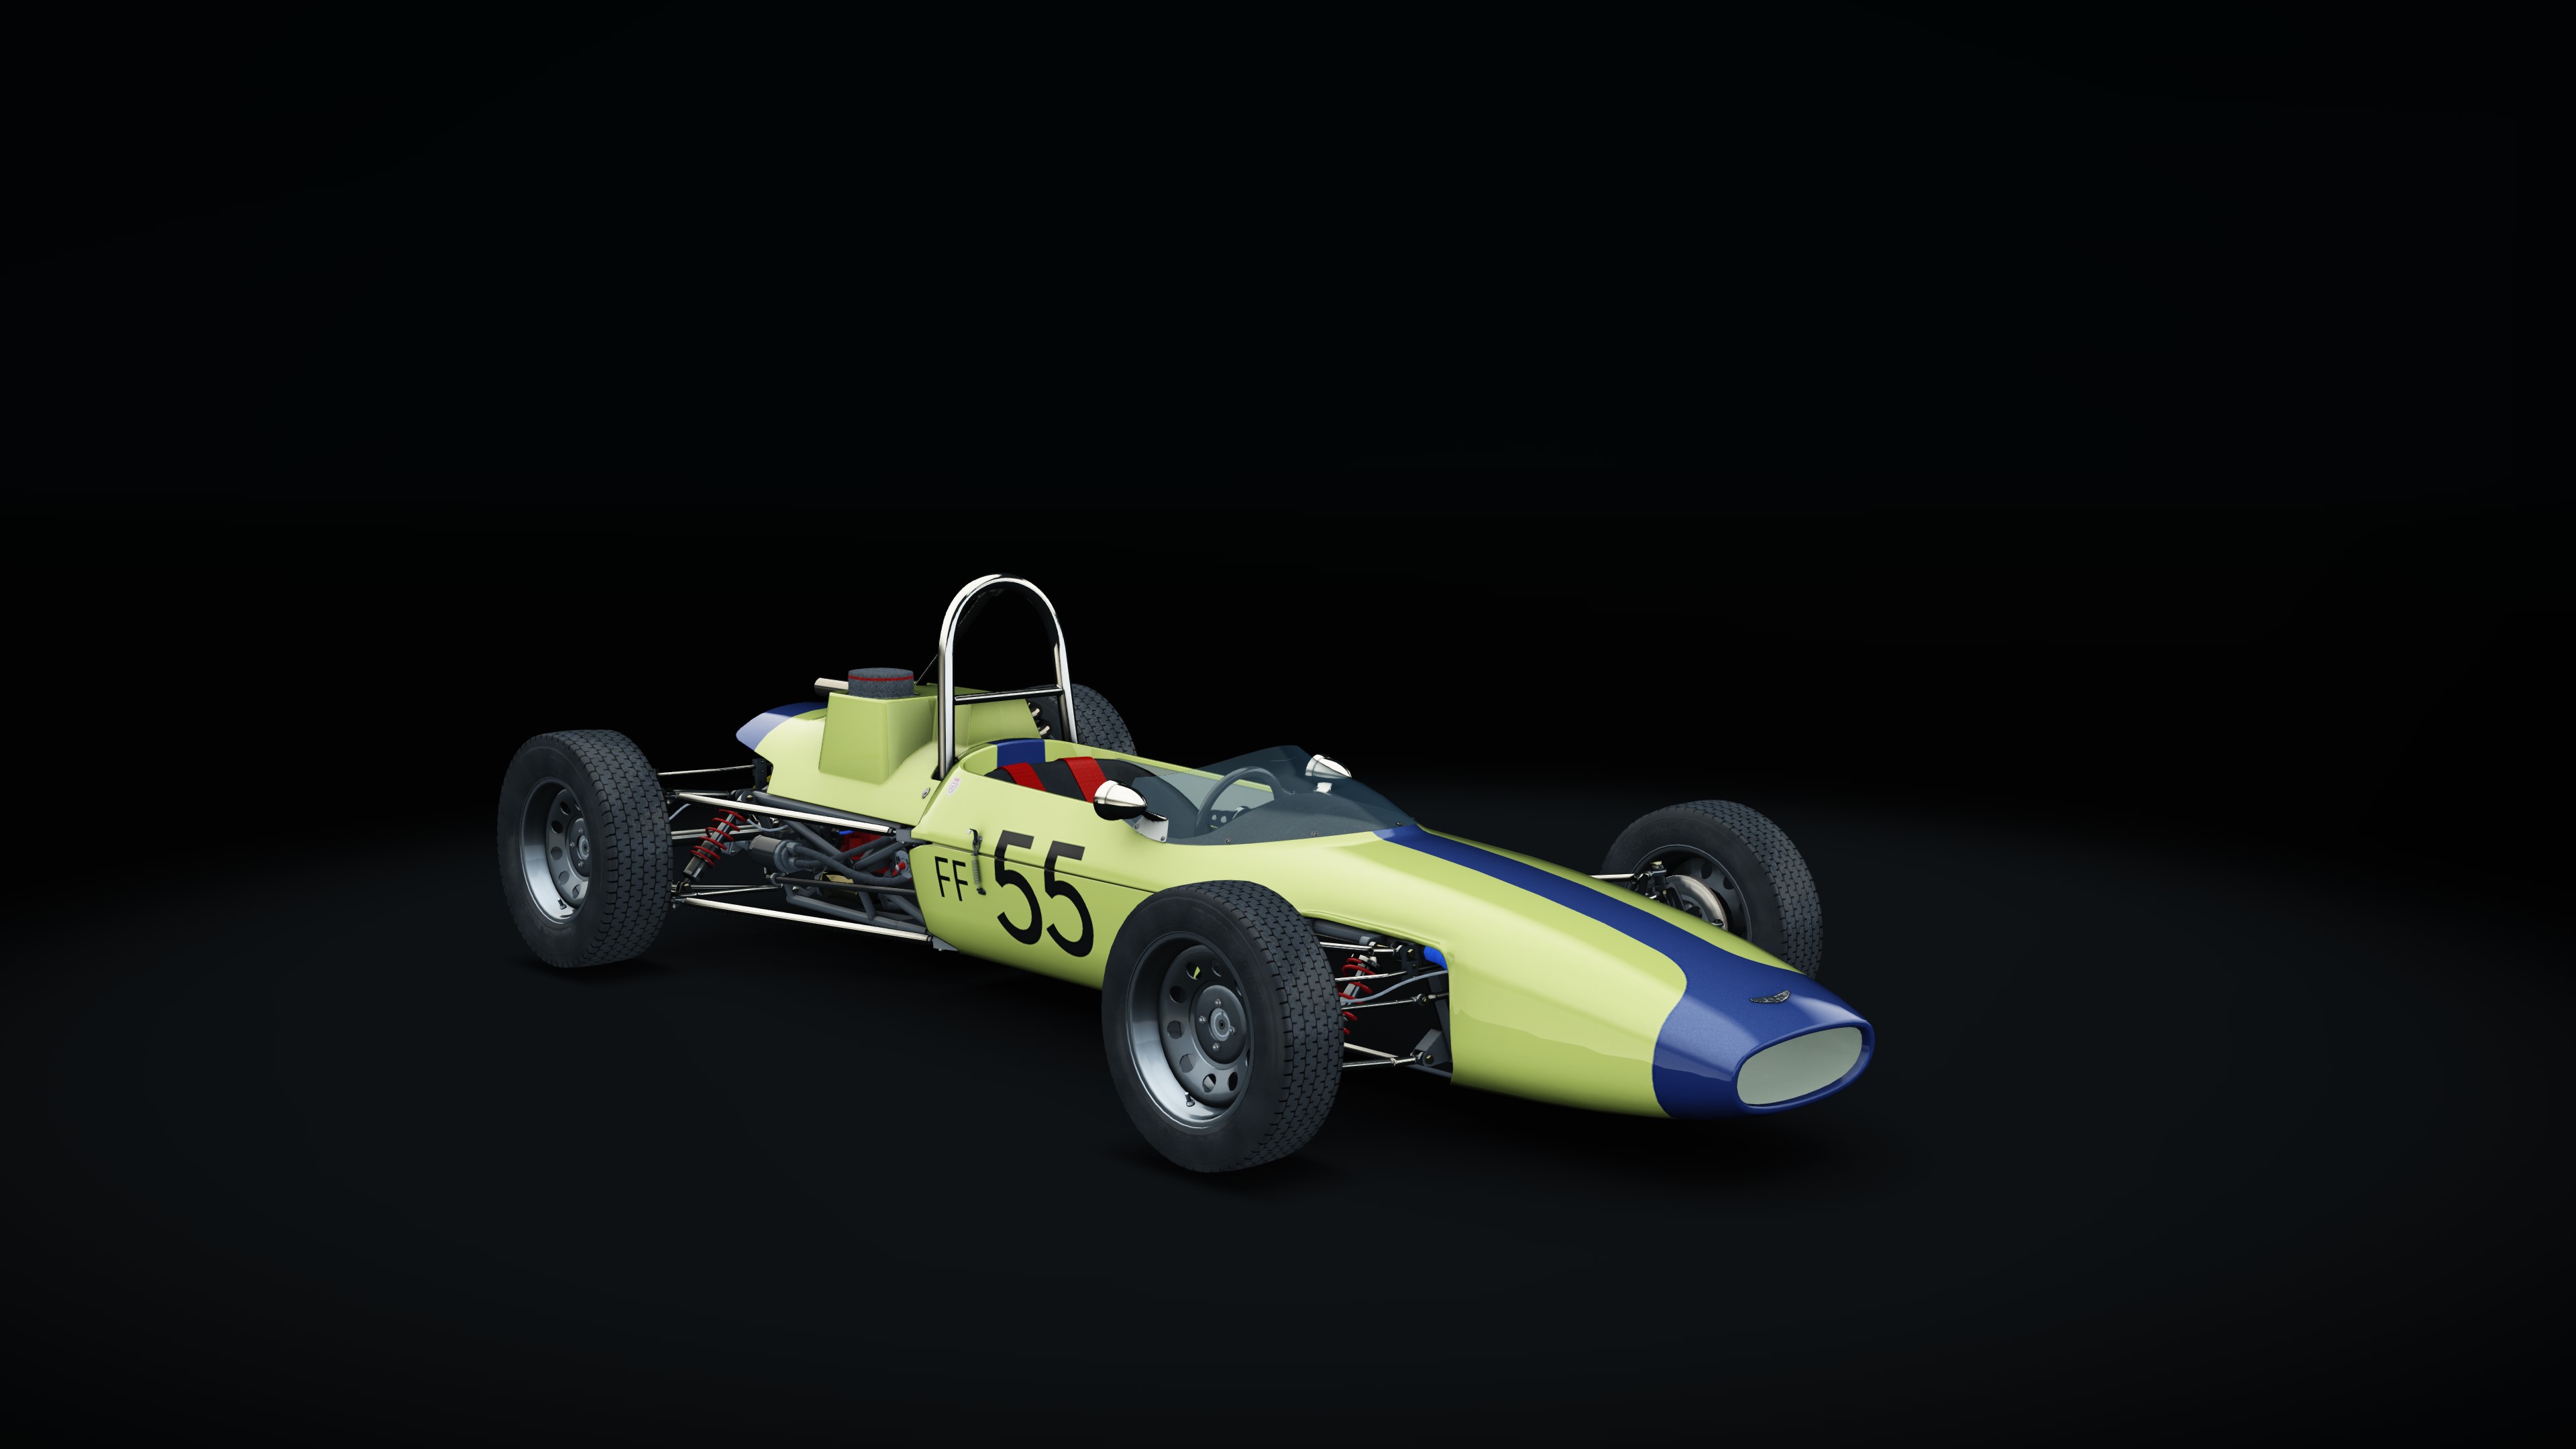 Russell-Alexis Mk. 14 Formula Ford, skin 55ACharlambides